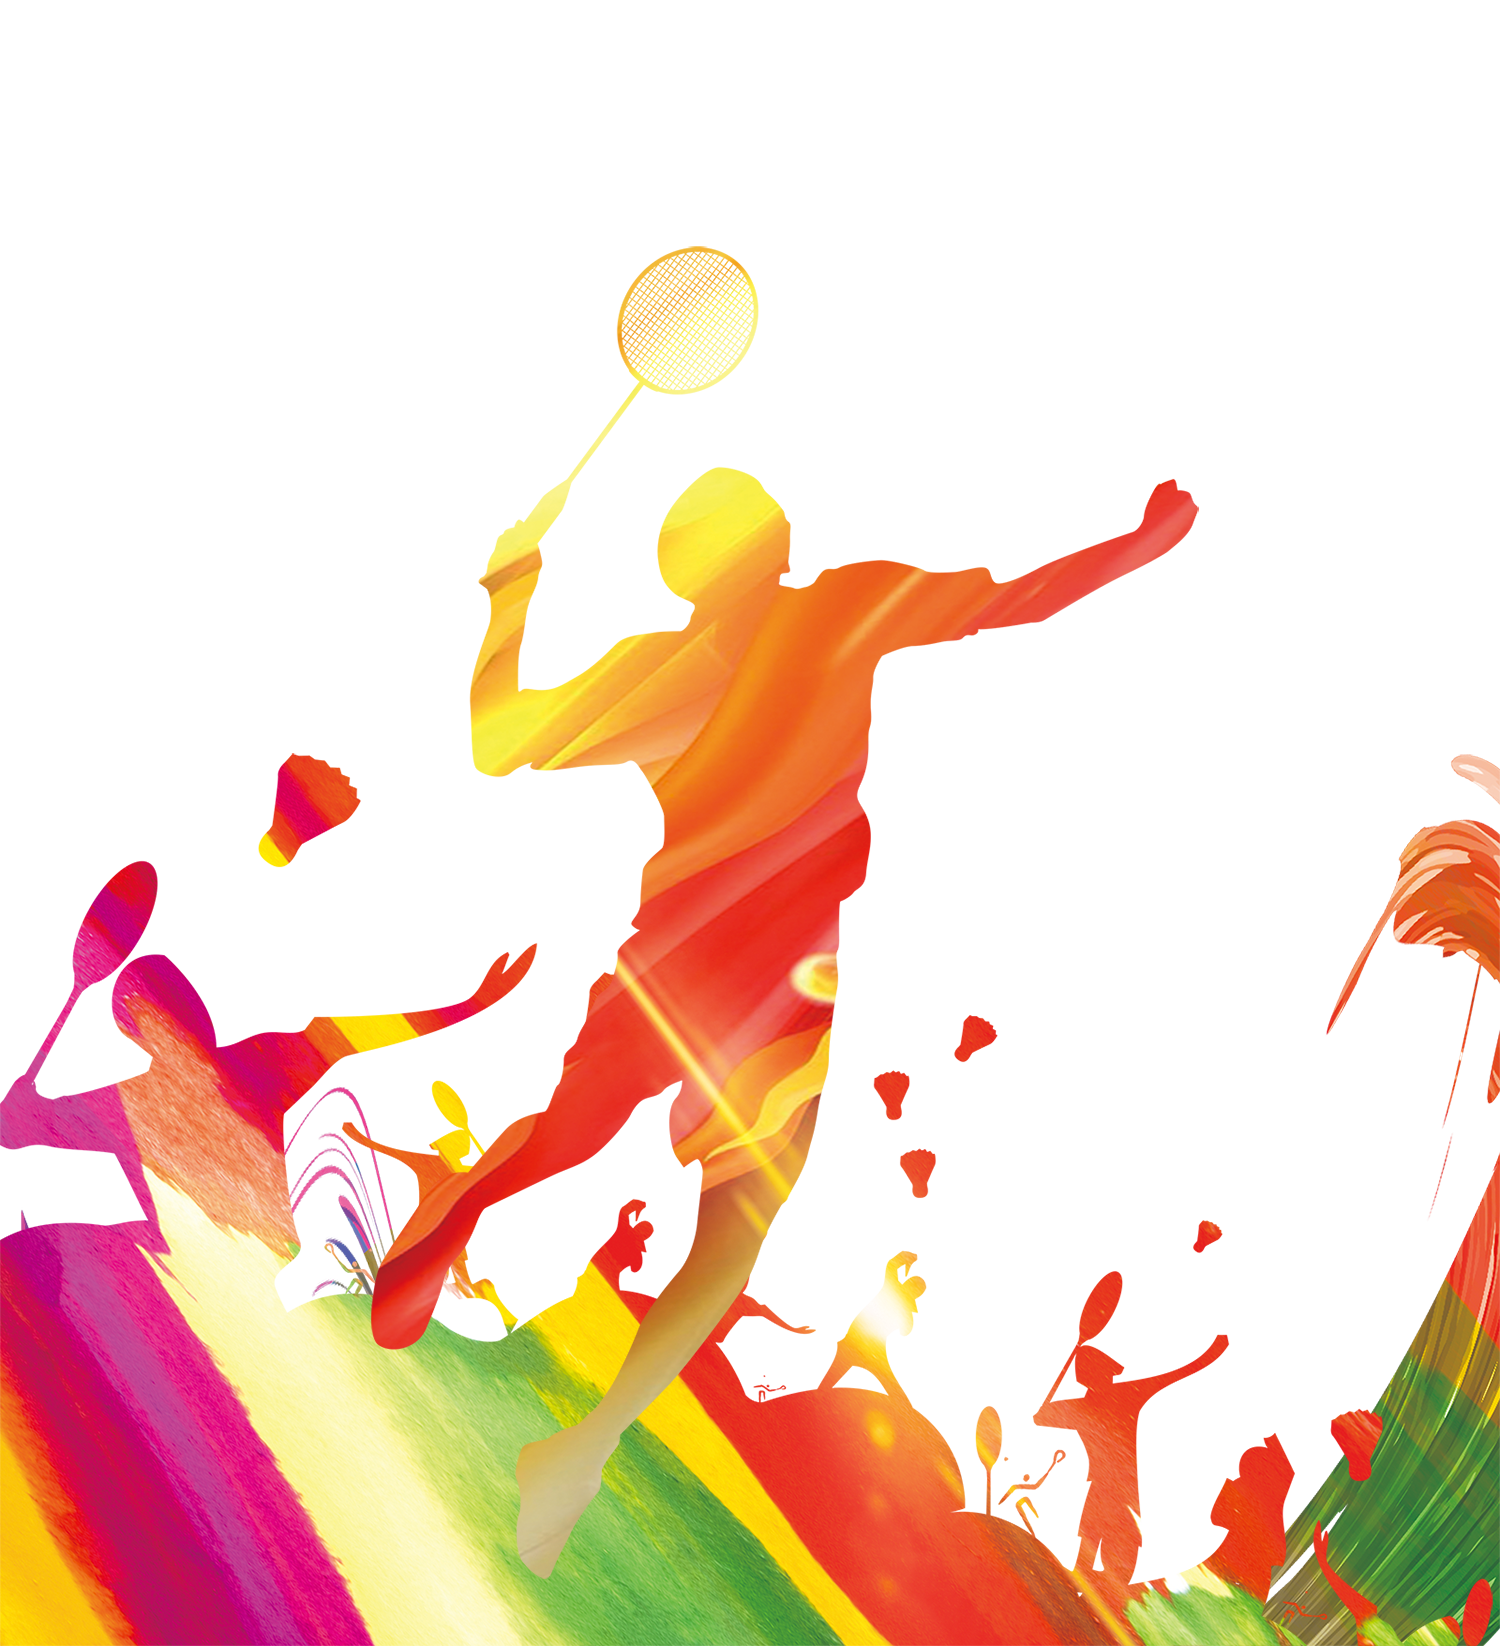 Silhouette Poster Players Badminton Adobe Illustrator Clipart